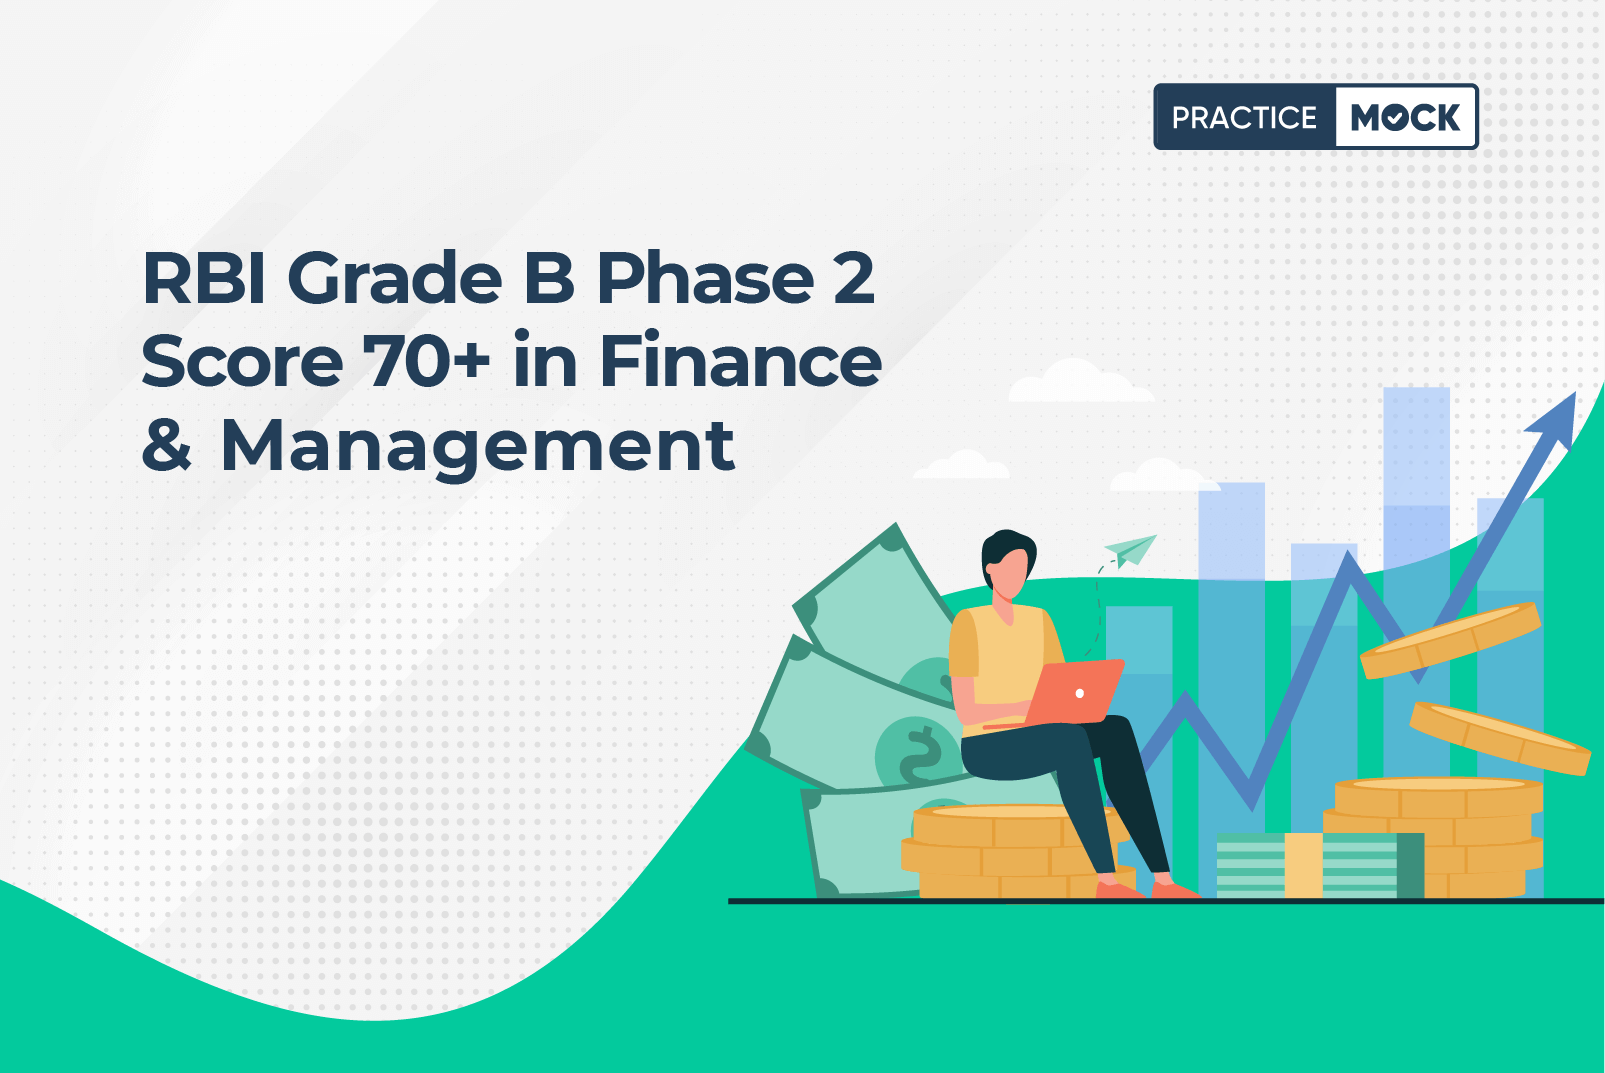 RBI Grade B Phase 2 Score 70+ in Finance & Management